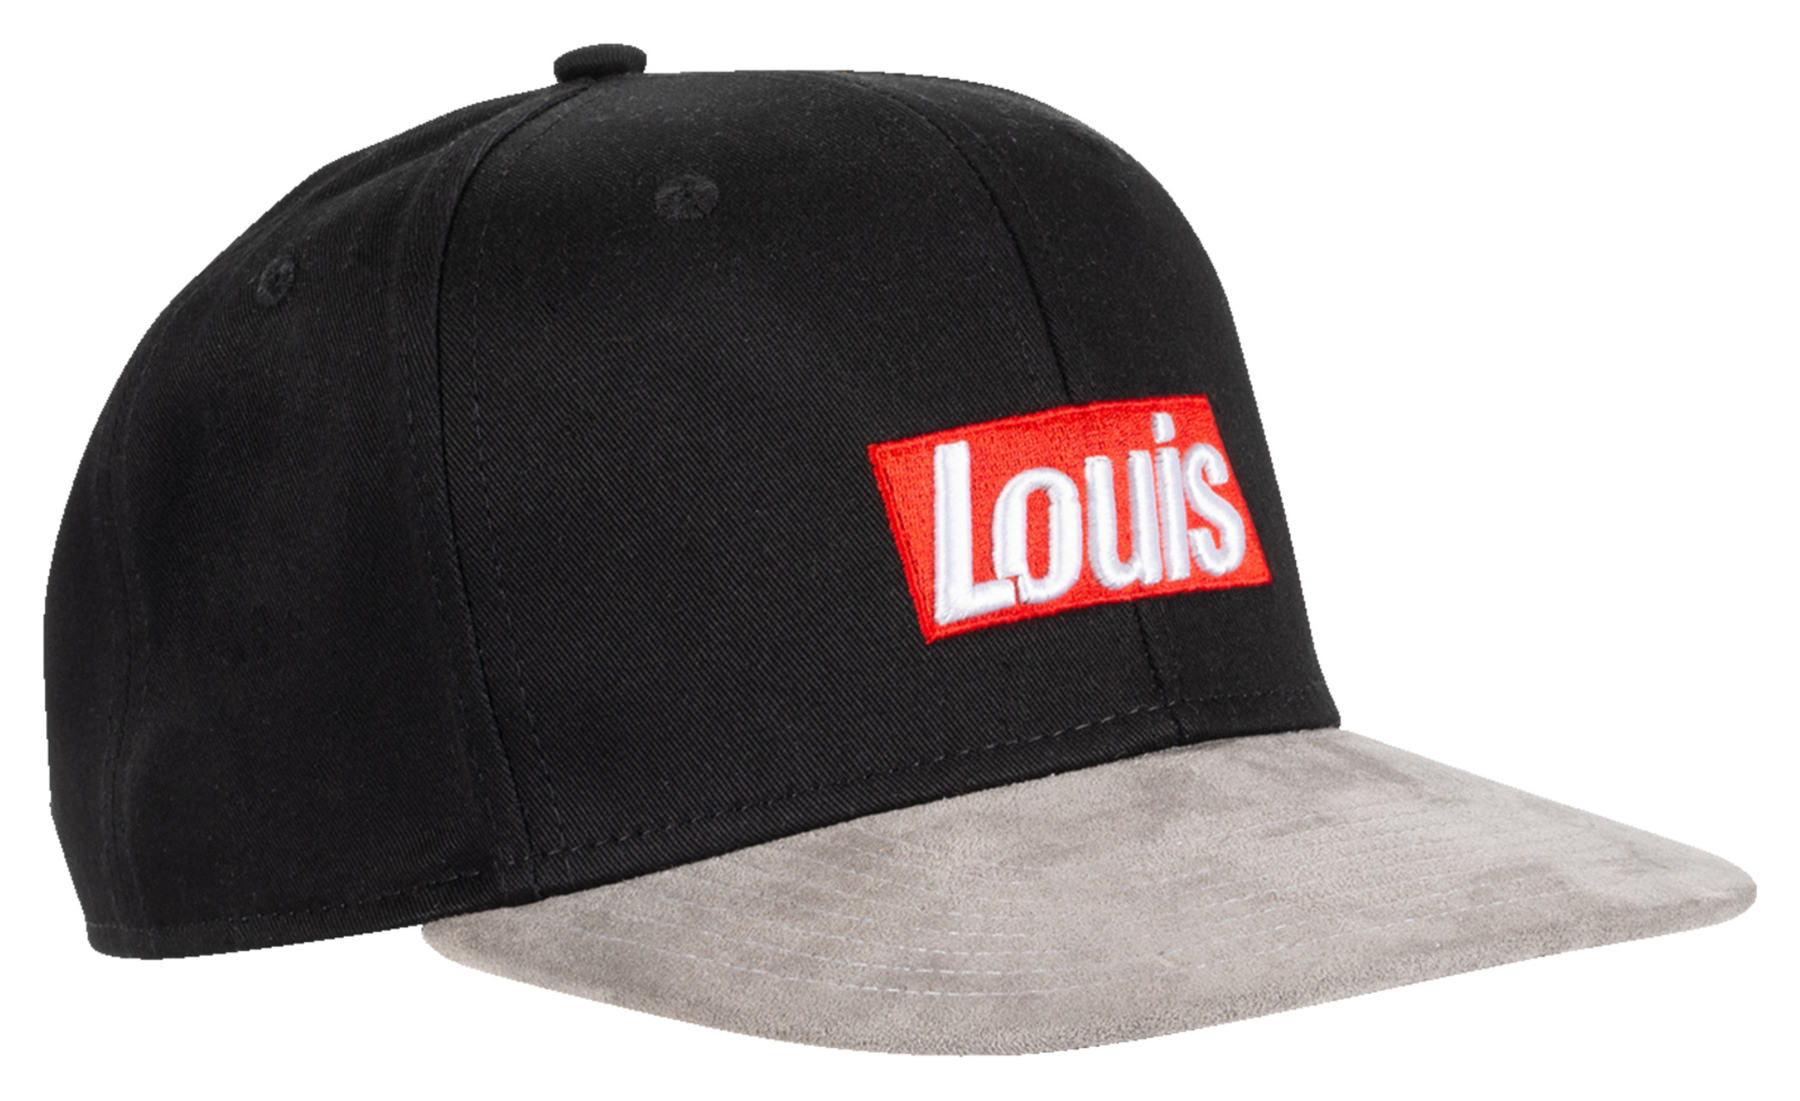 LOUIS COMMUNITY CAP